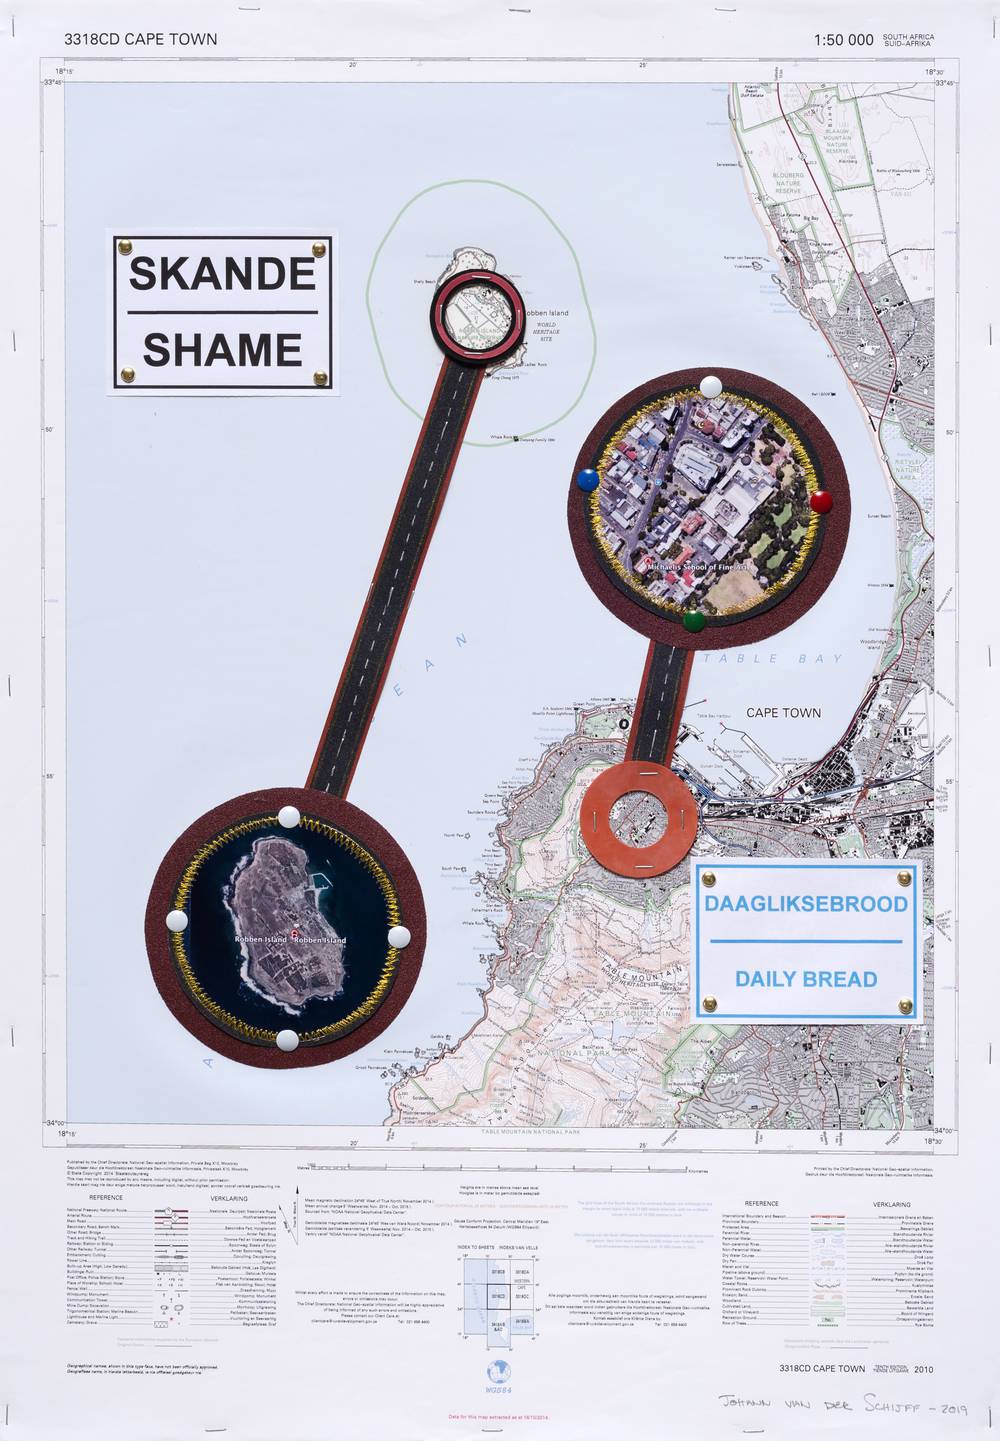 Skande (Shame), 2019 – Johann van der Schijff